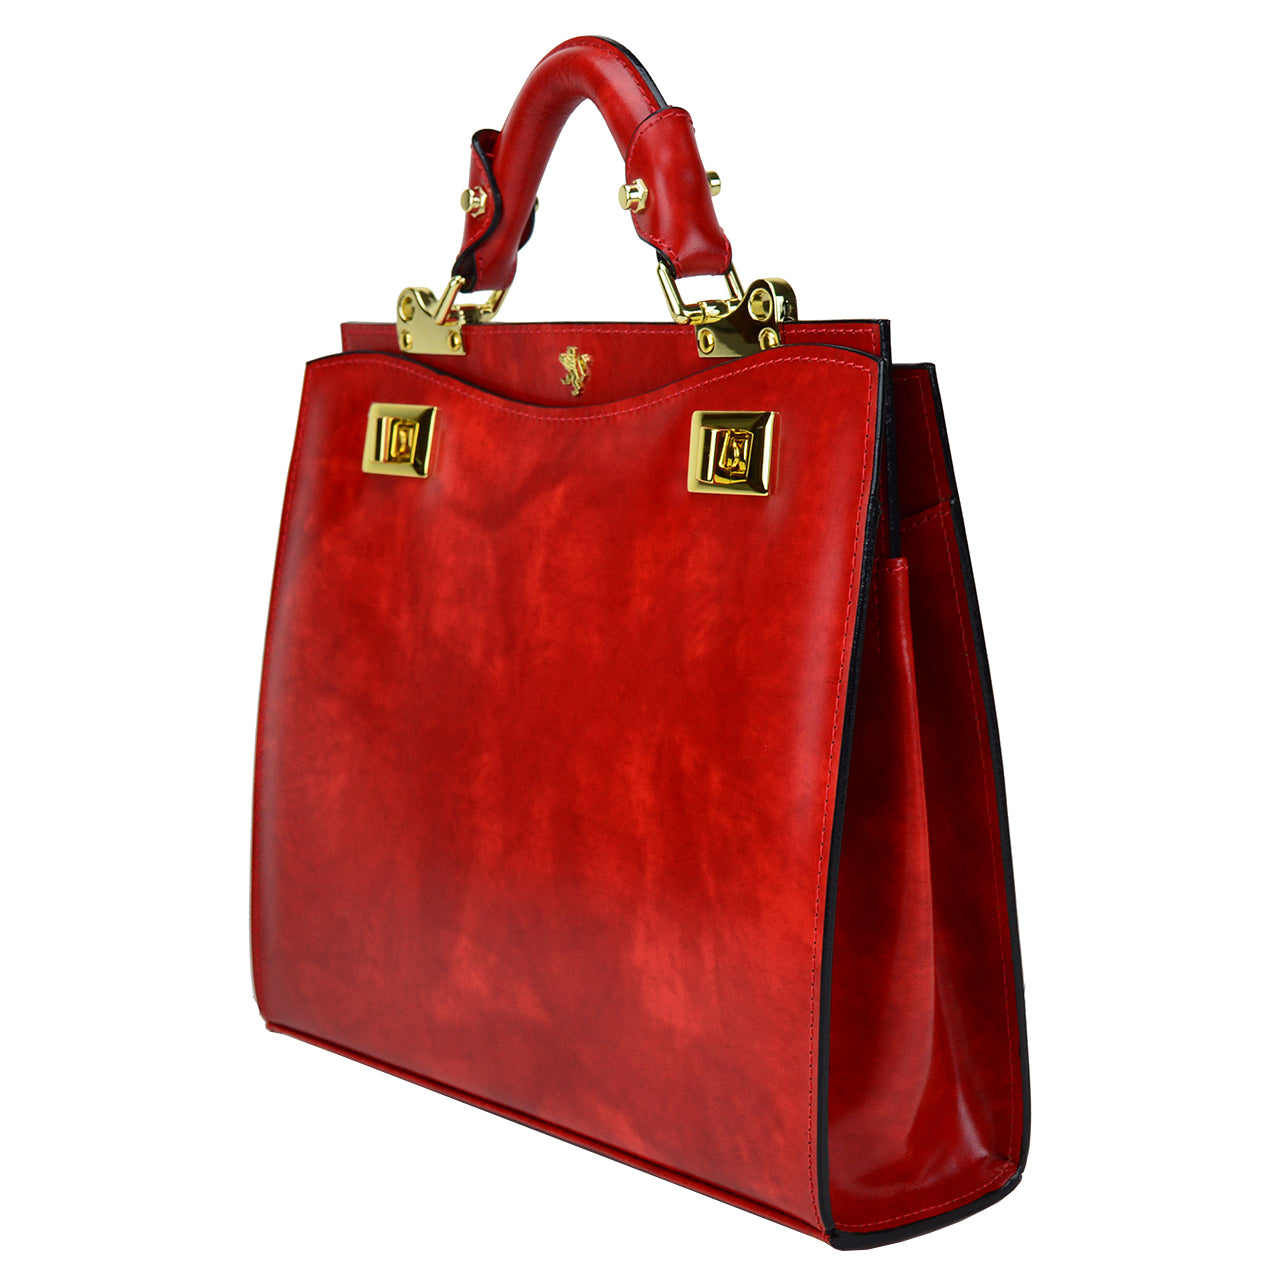 Pratesi Anna Maria Luisa de' Medici Medium Lady Bag in genuine Italian leather - Brunelleschi Leather Cherry